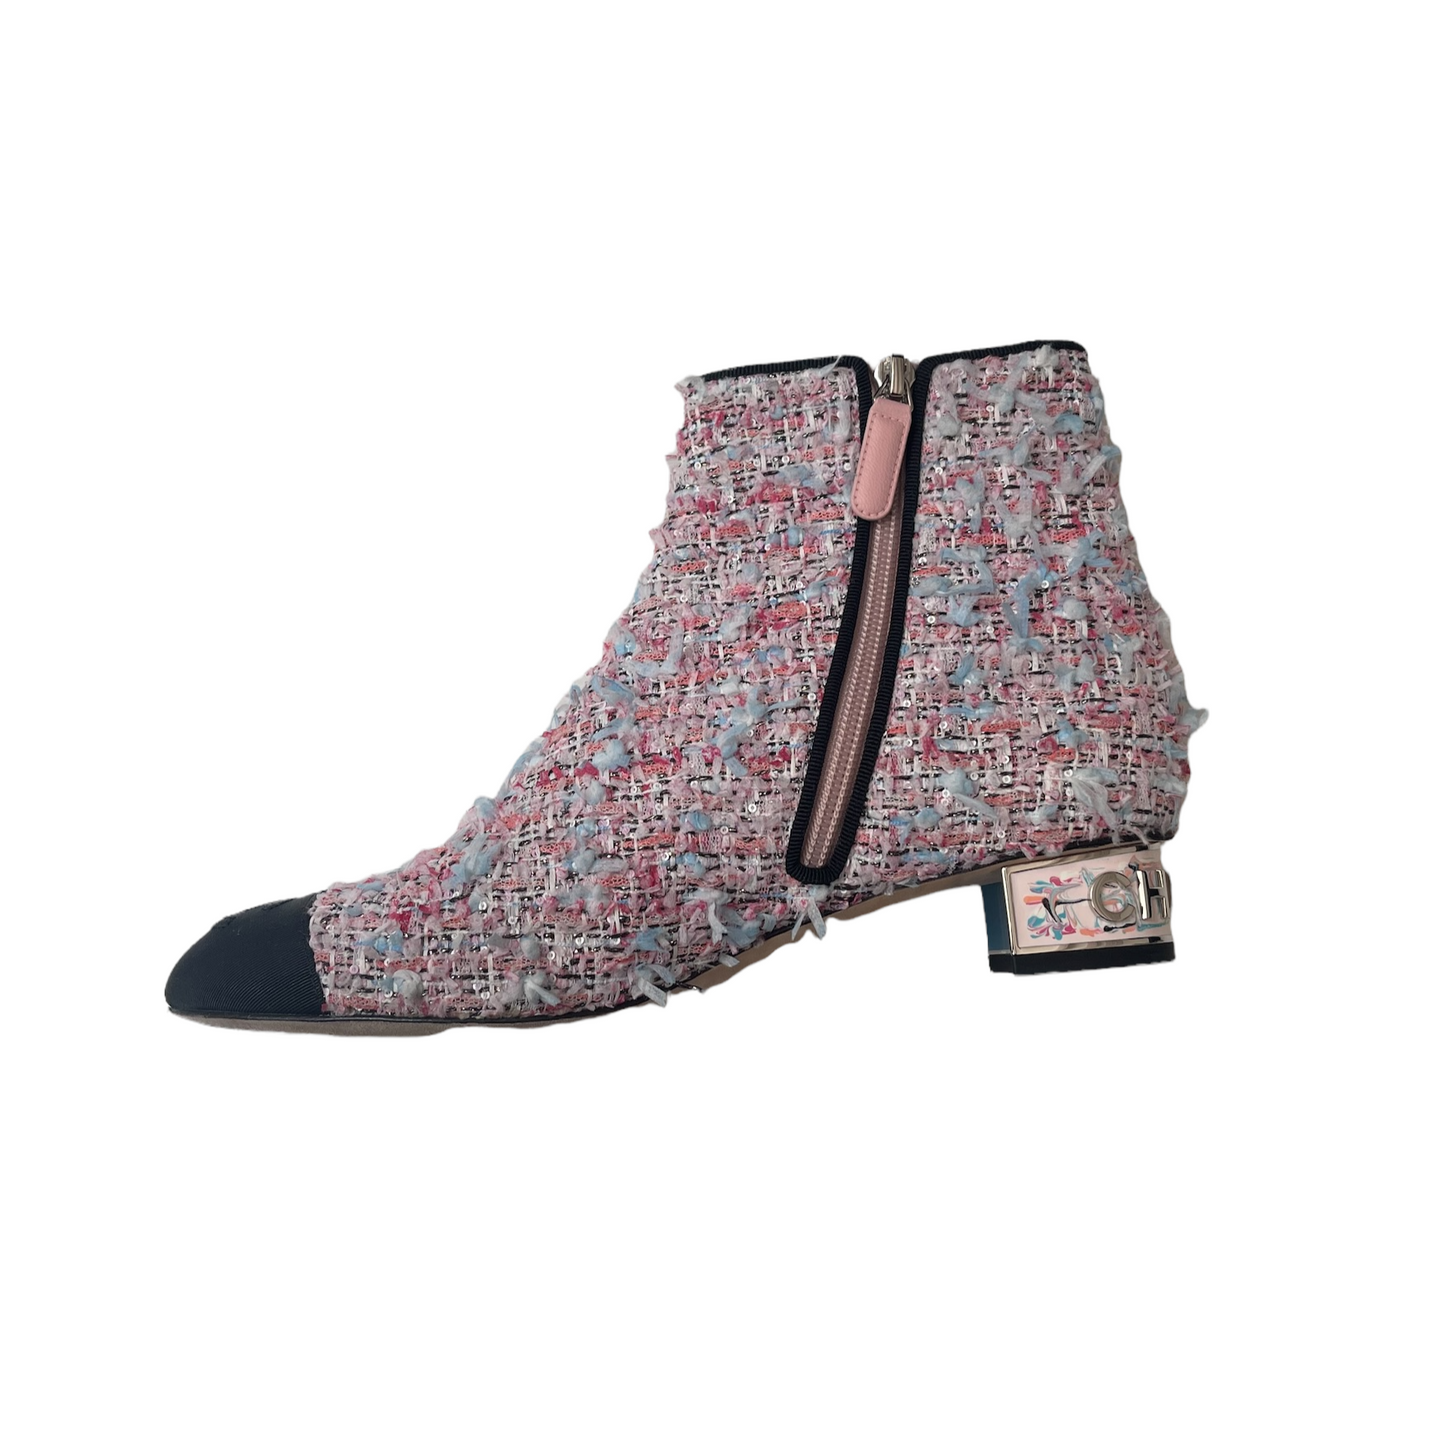 Tweed Pink Boots - 7.5